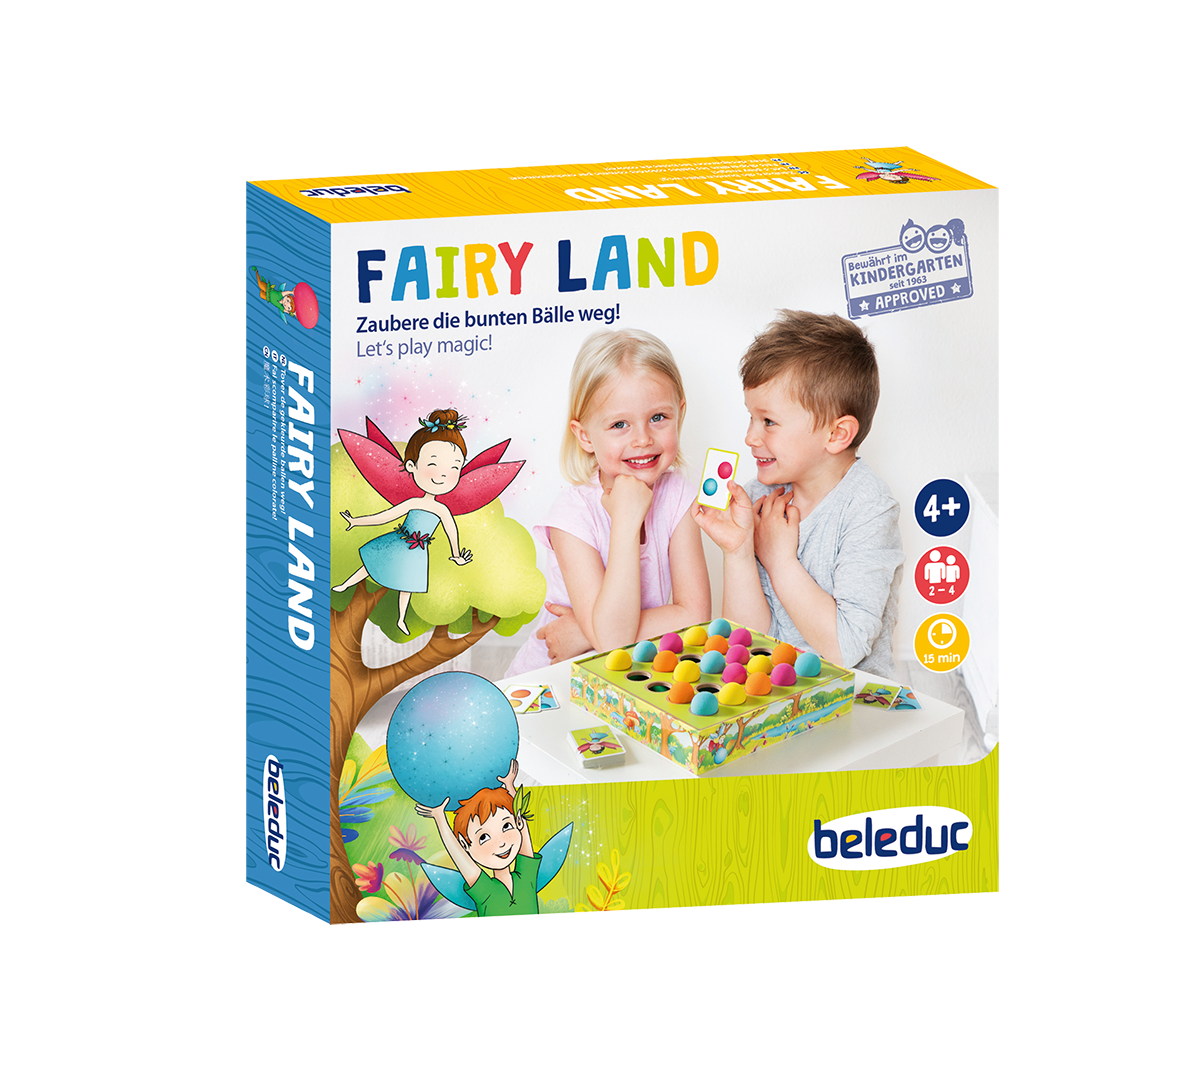 Beleduc Fairy Land Game 魔法彈球遊戲